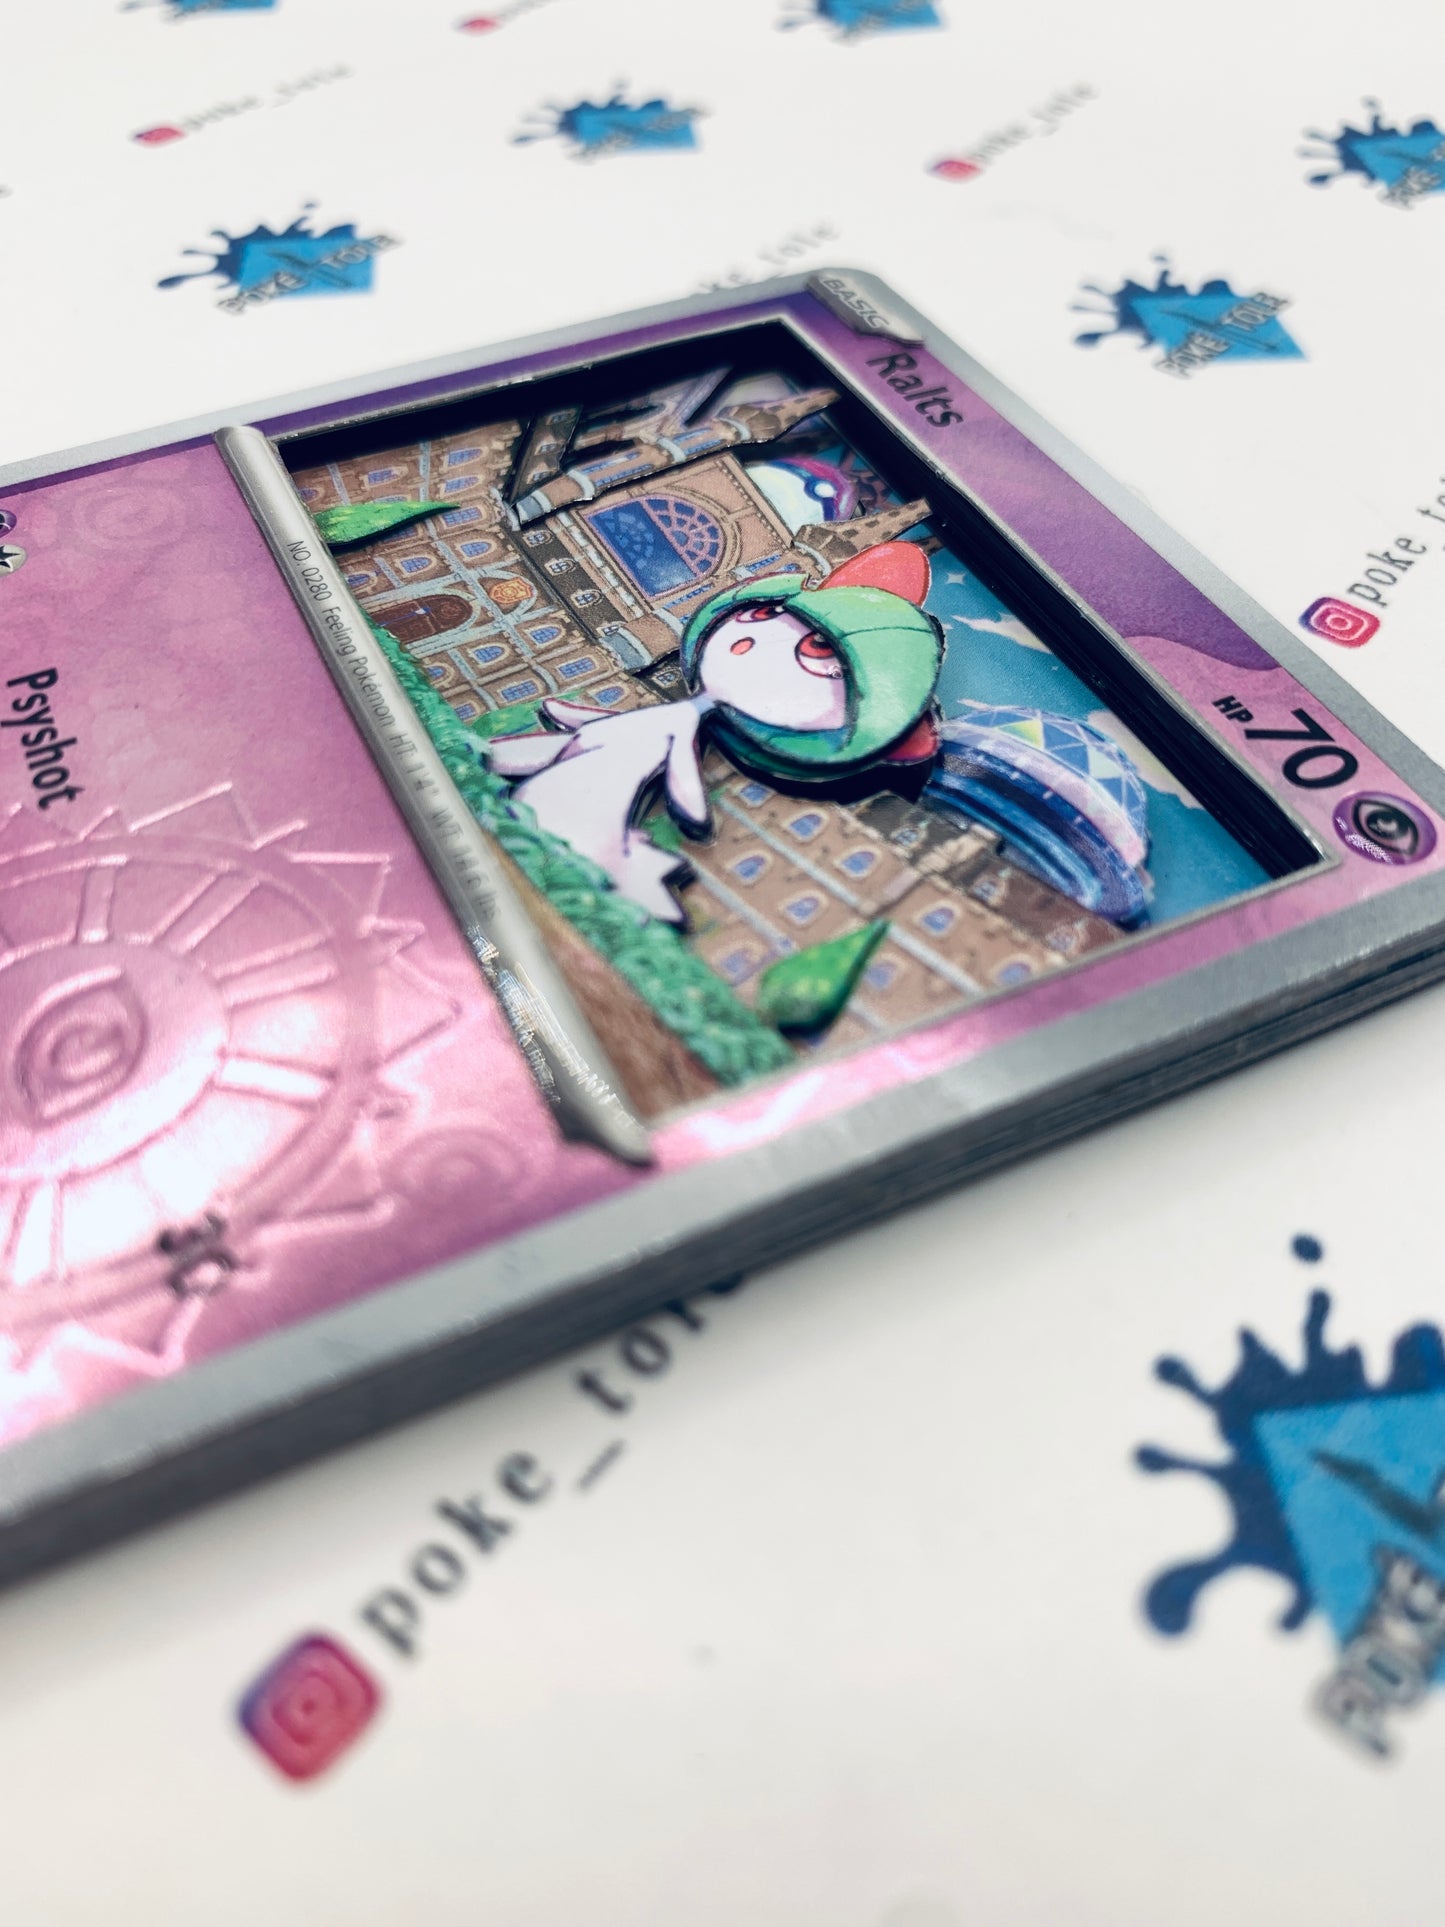 PokéTole 3D Pokémon Card Shadow Box: Ralts